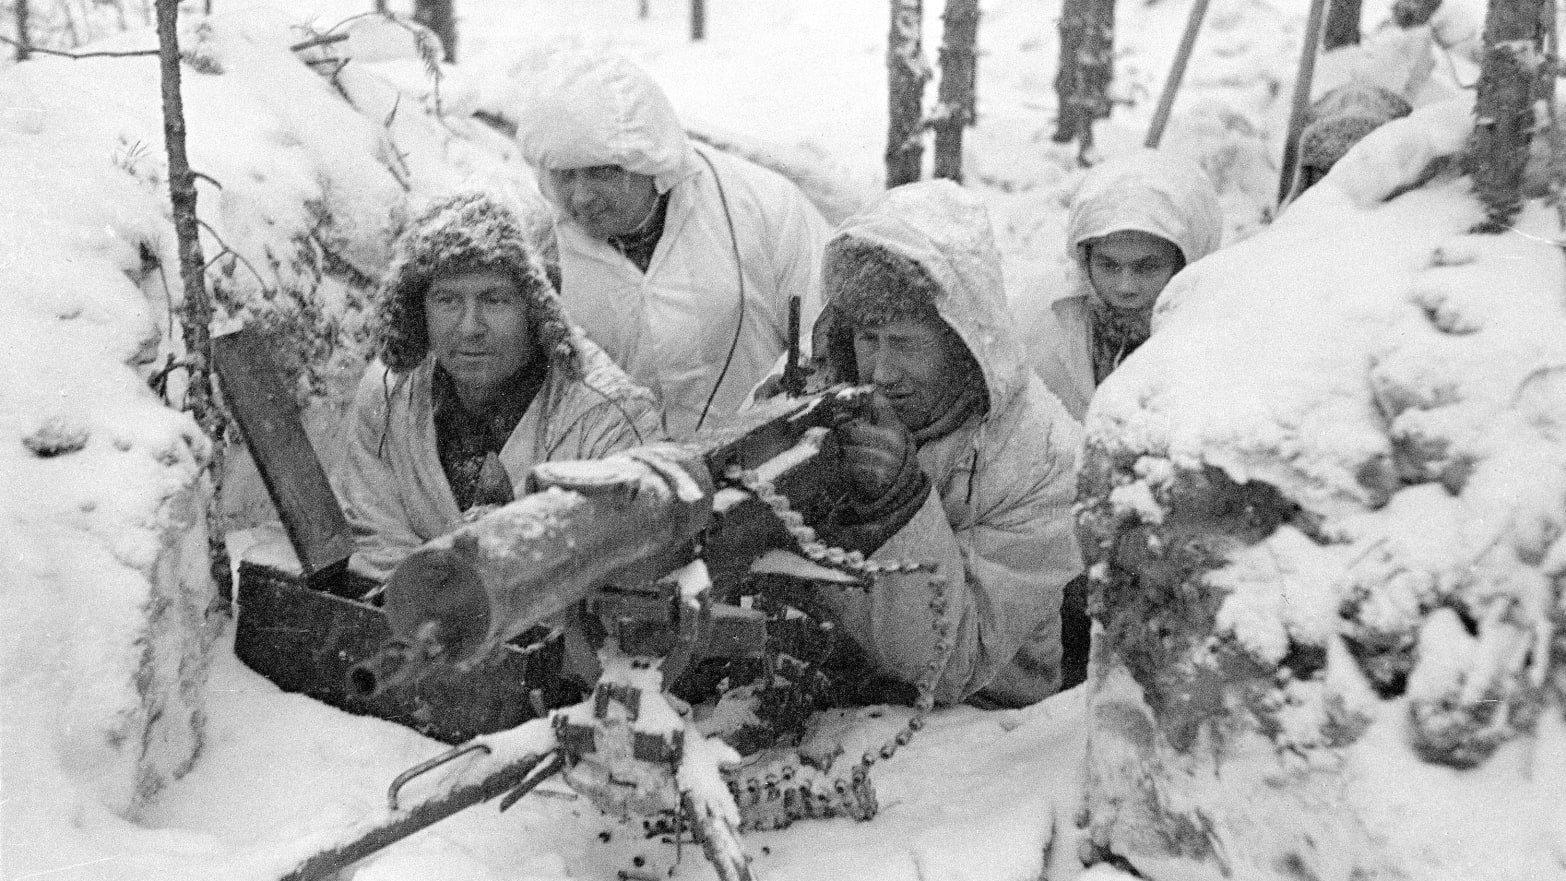 Russias World War II Invasion of Finland Eerily Mirrors Ukraine